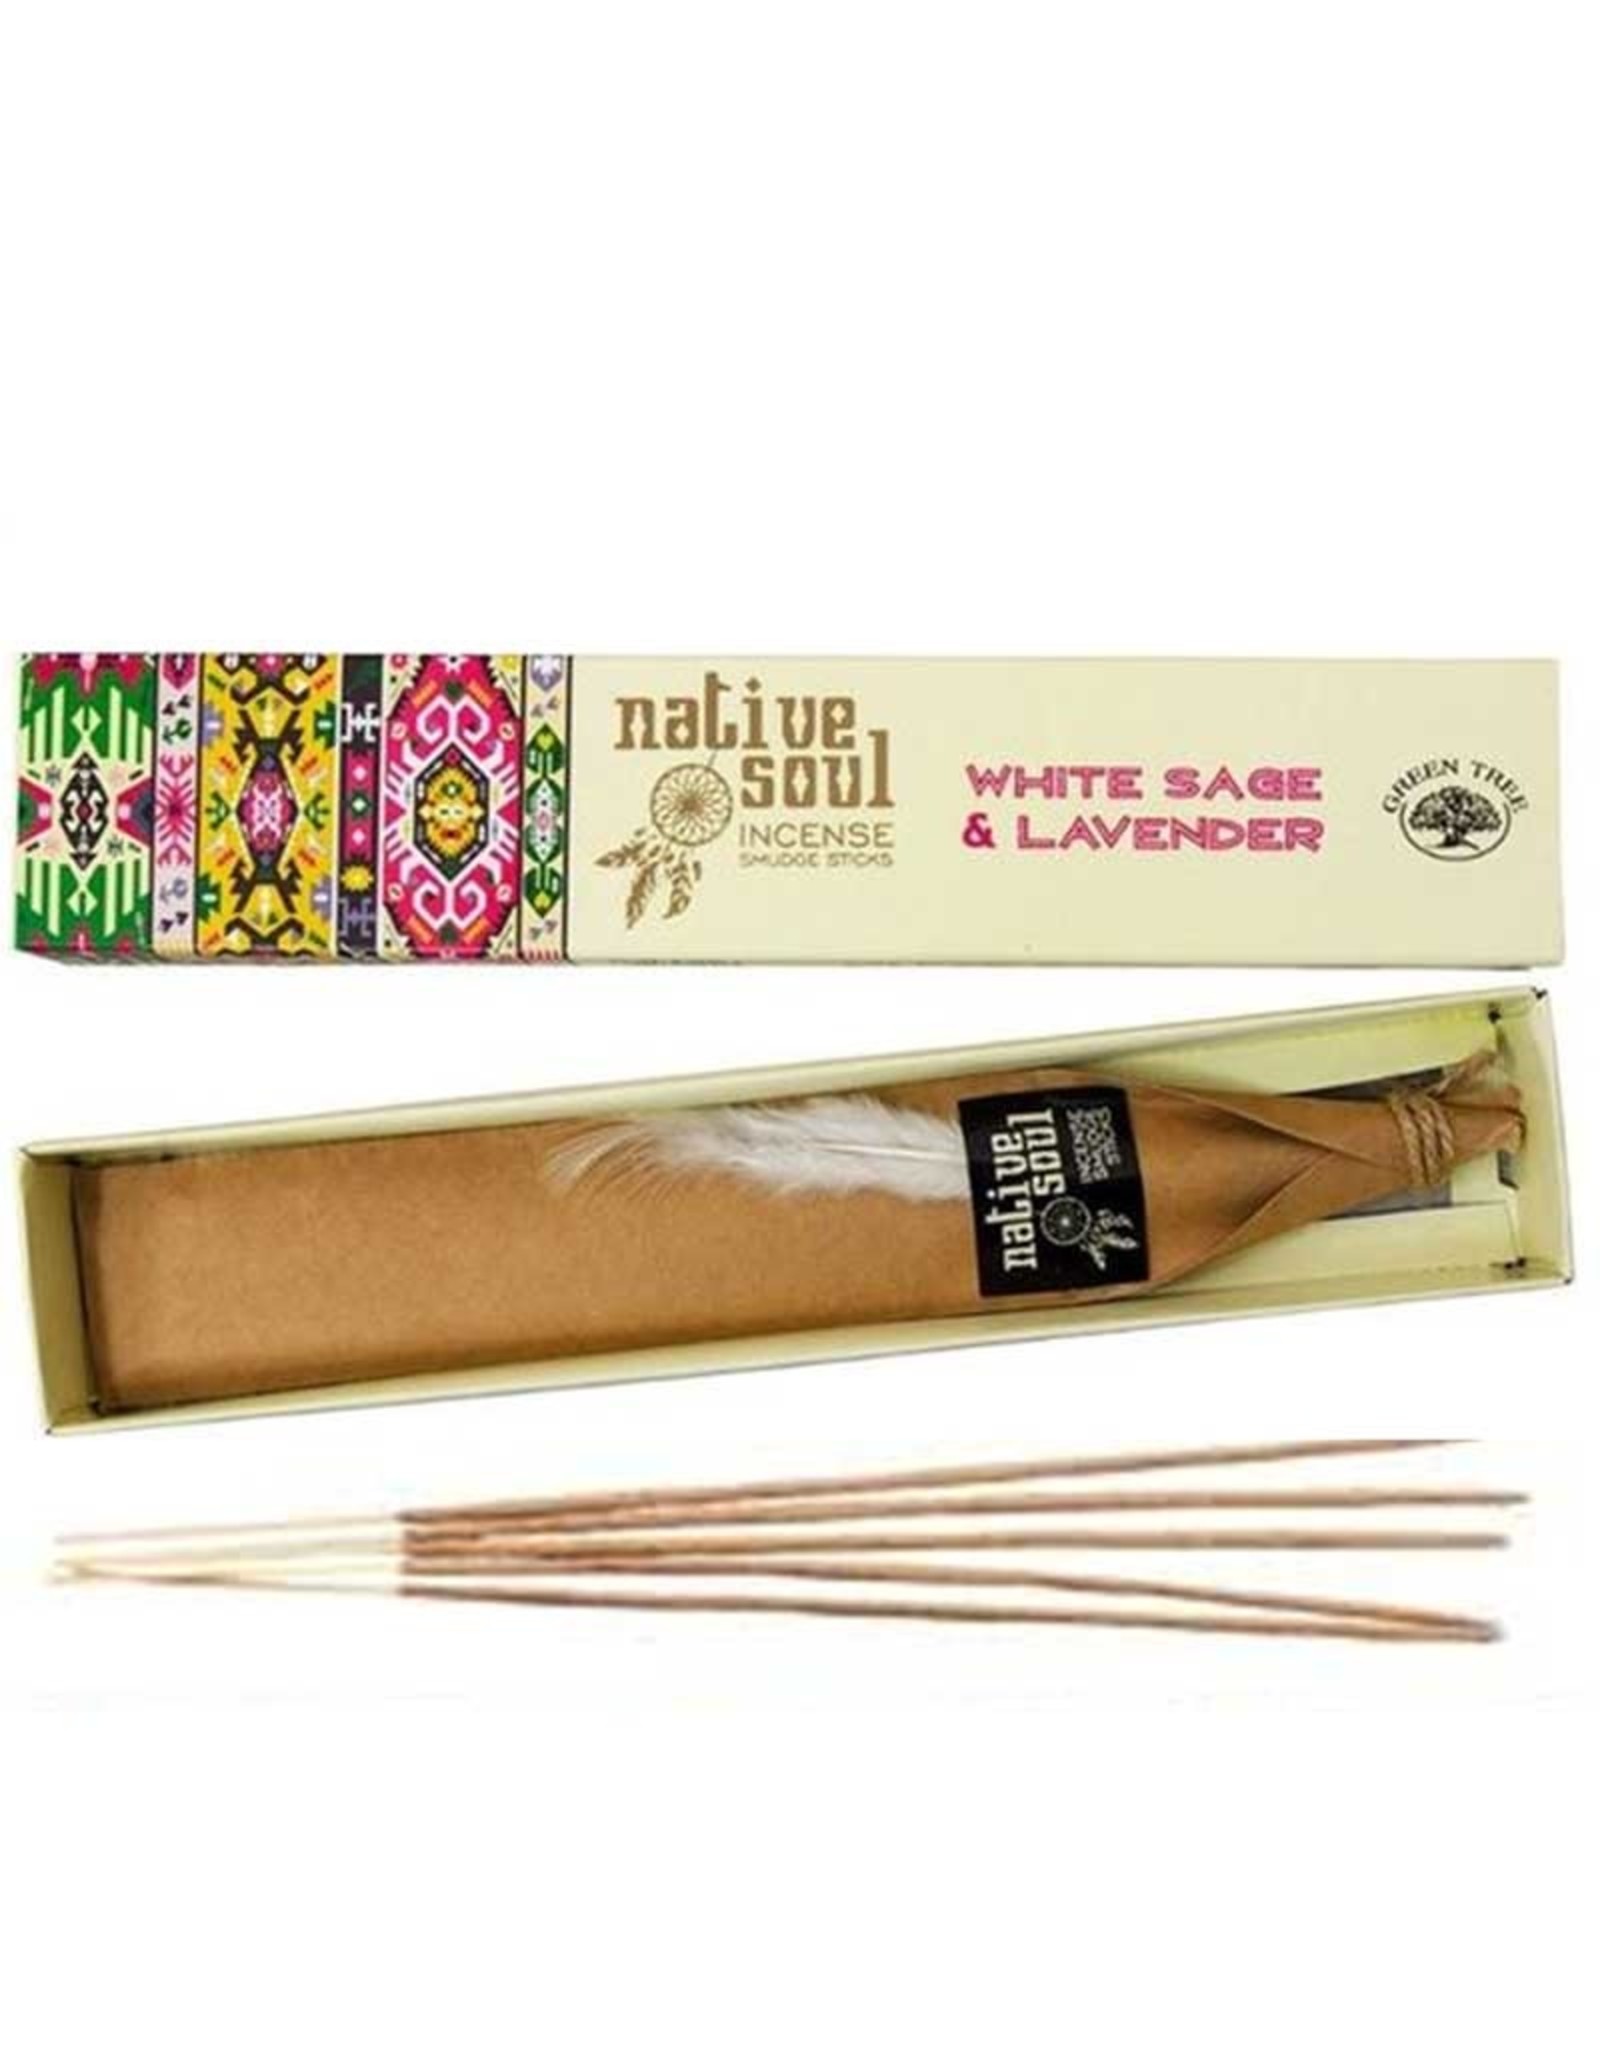 Native Soul White Sage & Lavender Native Soul Incense Sticks